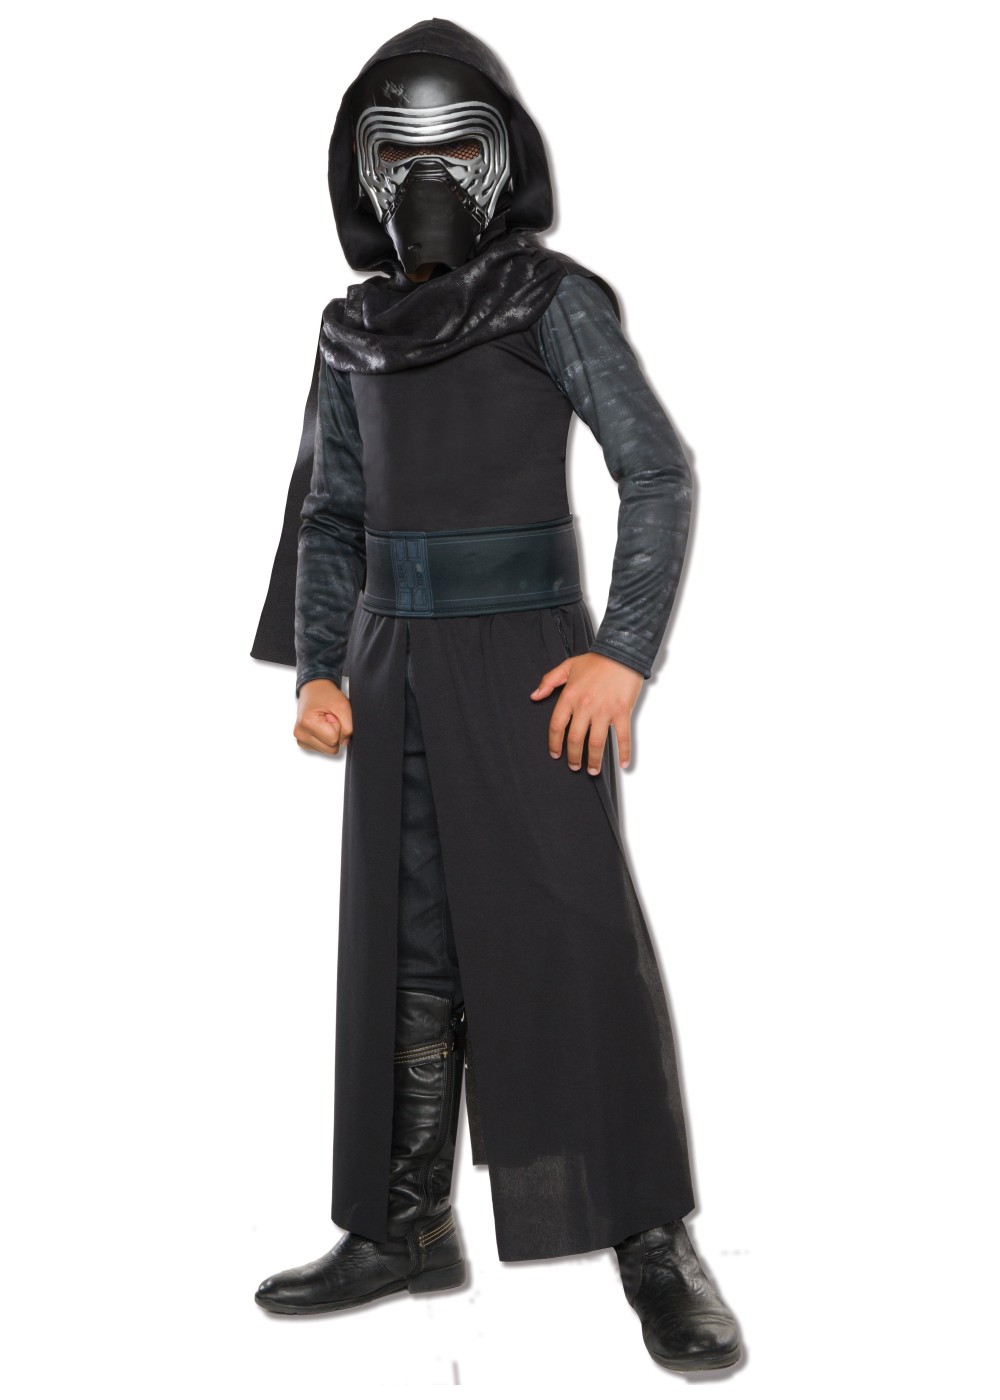 Star Wars Kylo Ren The Force Awakens Boys Costume